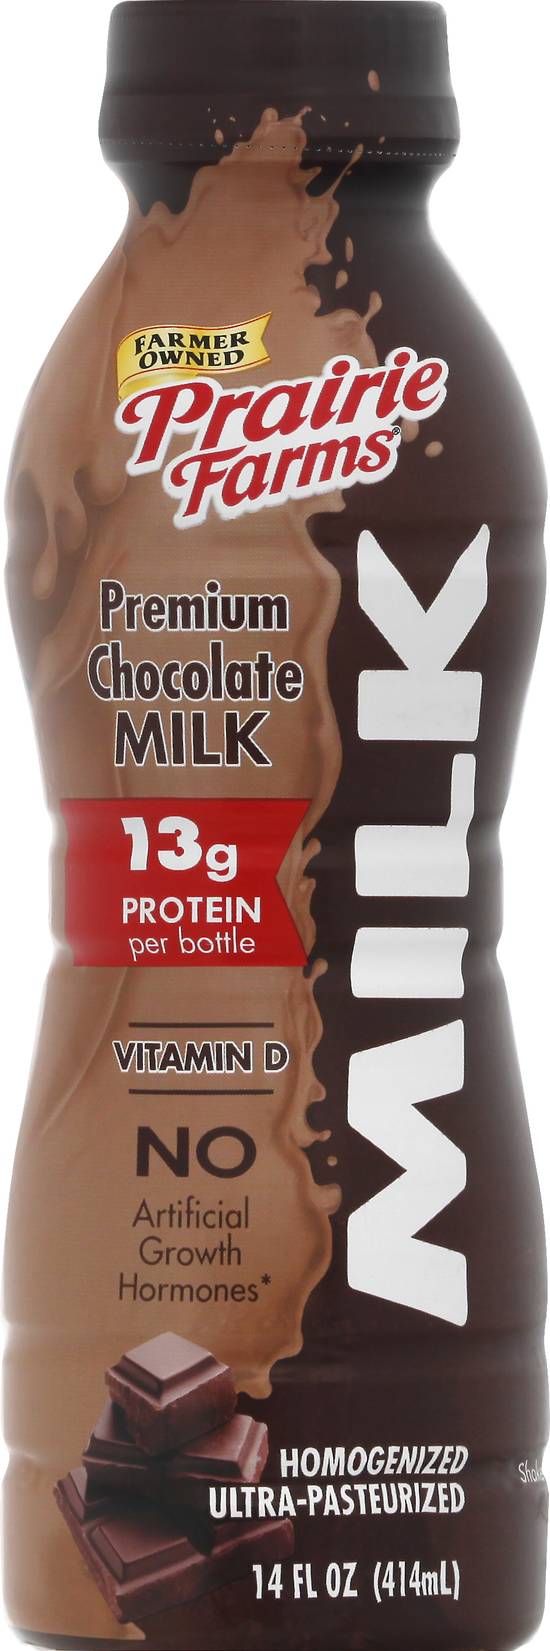 Prairie Farms Vitamin D Homogenized Ultra-Pasteurized Milk (14 fl oz) (premium chocolate)